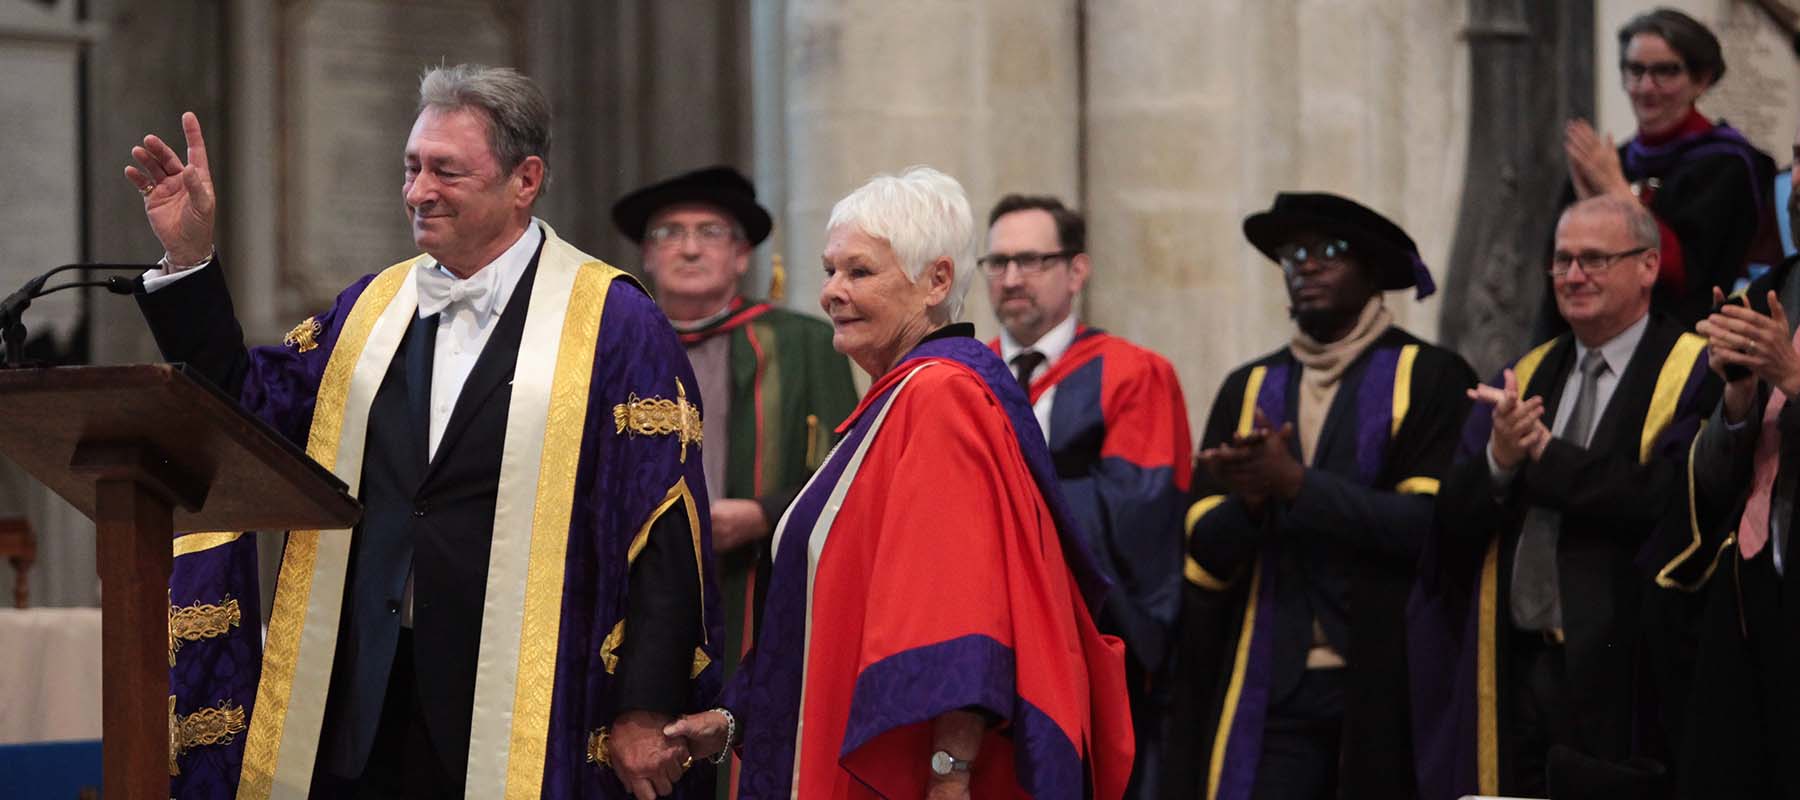 Alan Titchmarsh with Dame Judi Dench at Graduation 2019